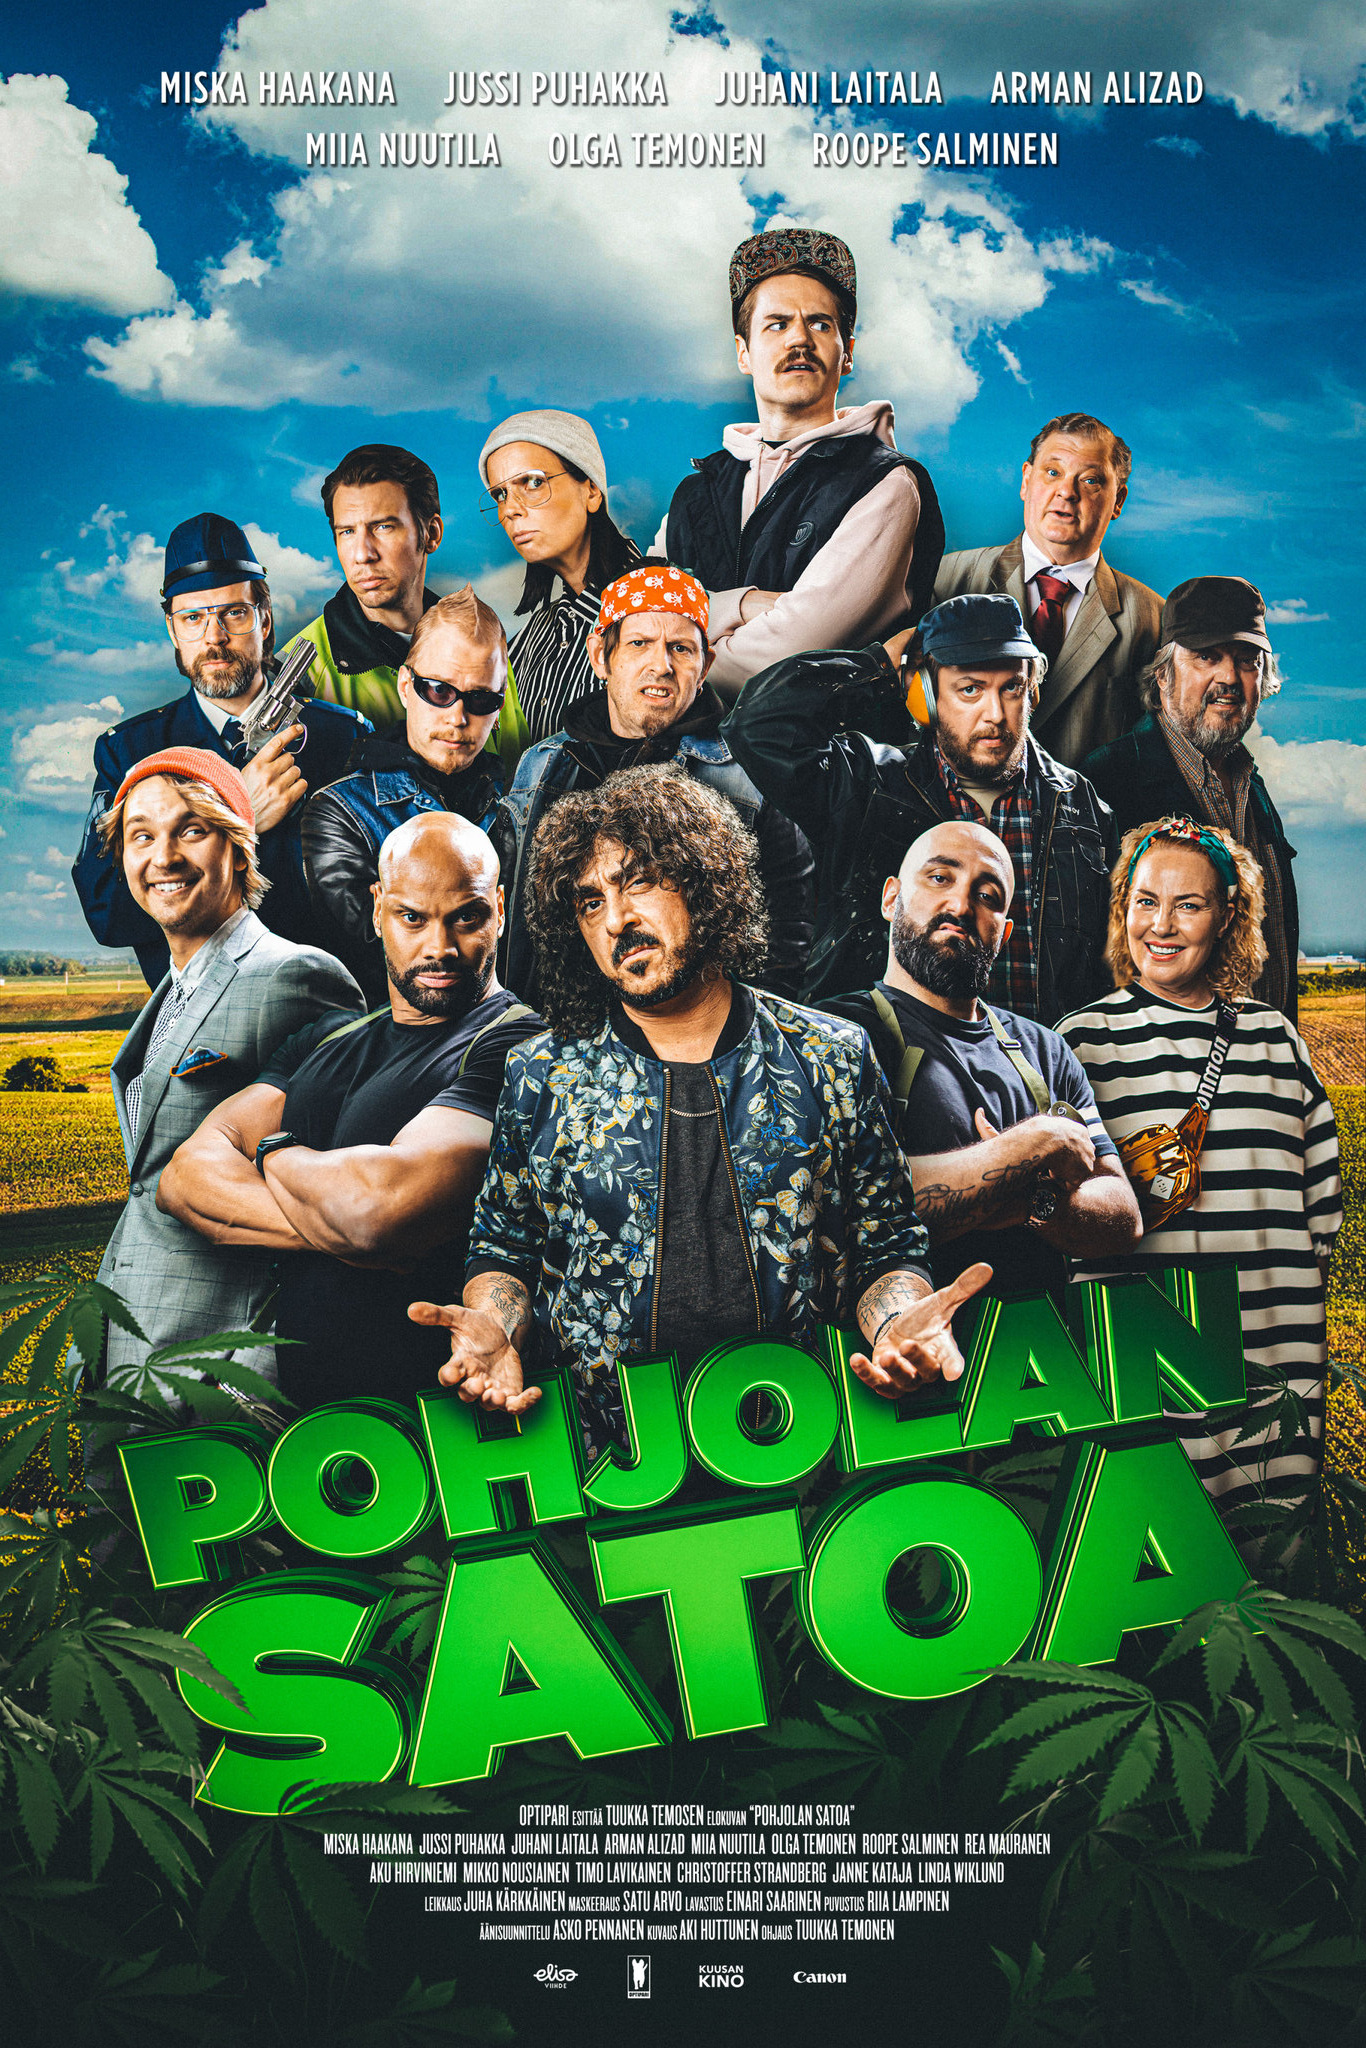 Mega Sized Movie Poster Image for Pohjolan satoa 